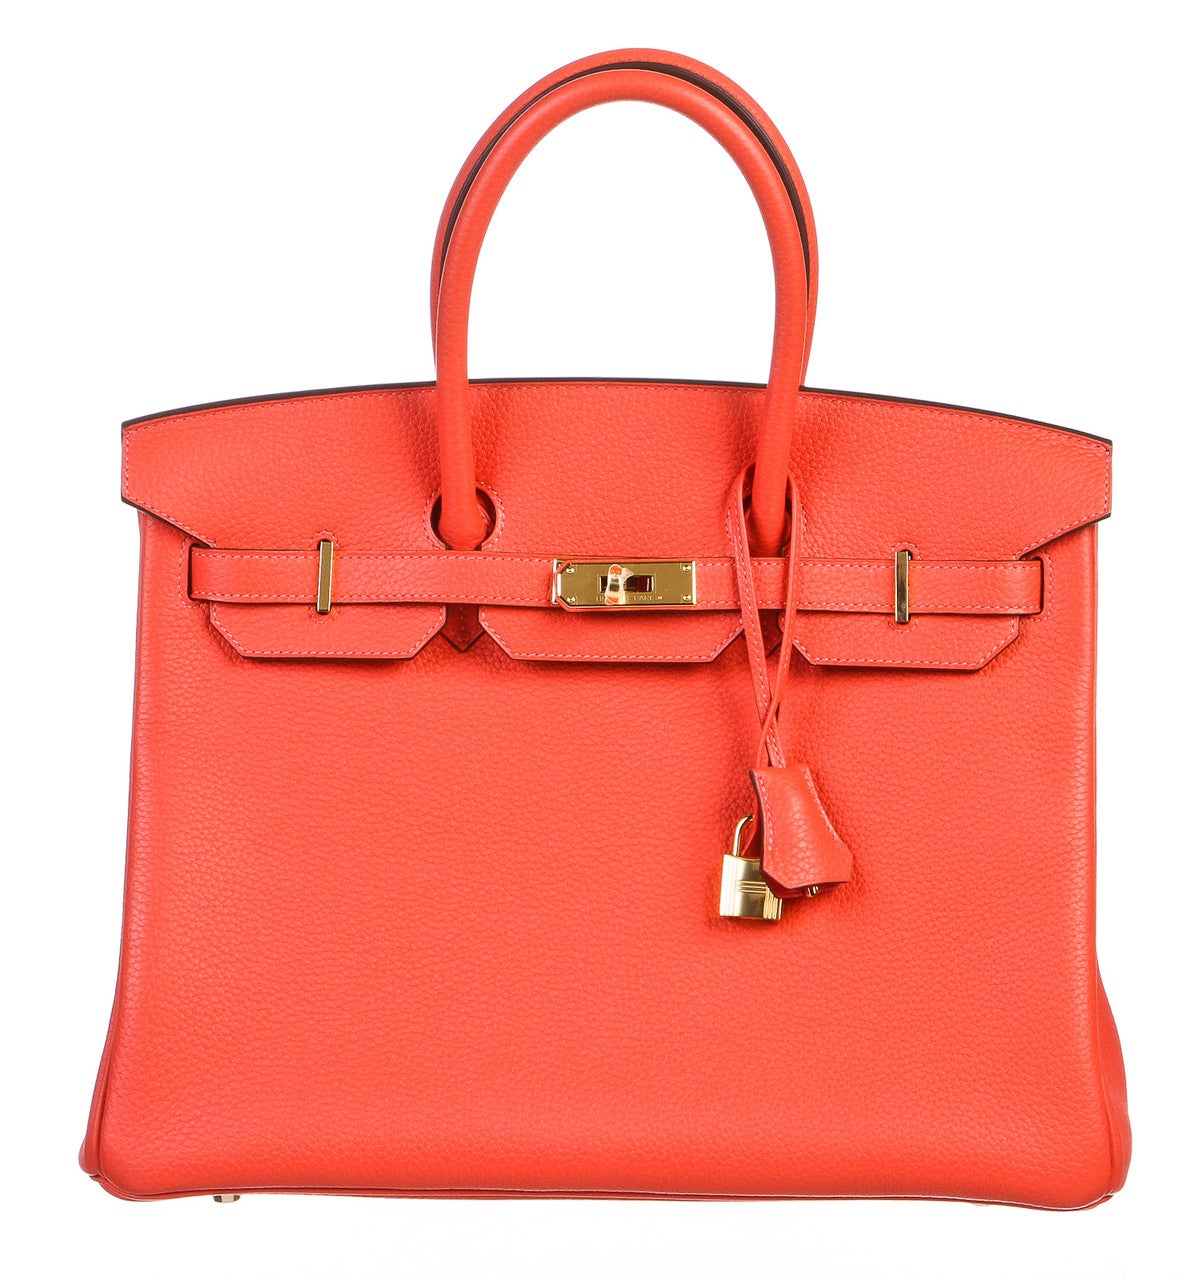 Hermes Rouge Pivoine Togo Leather 35cm Birkin Handbag GHW